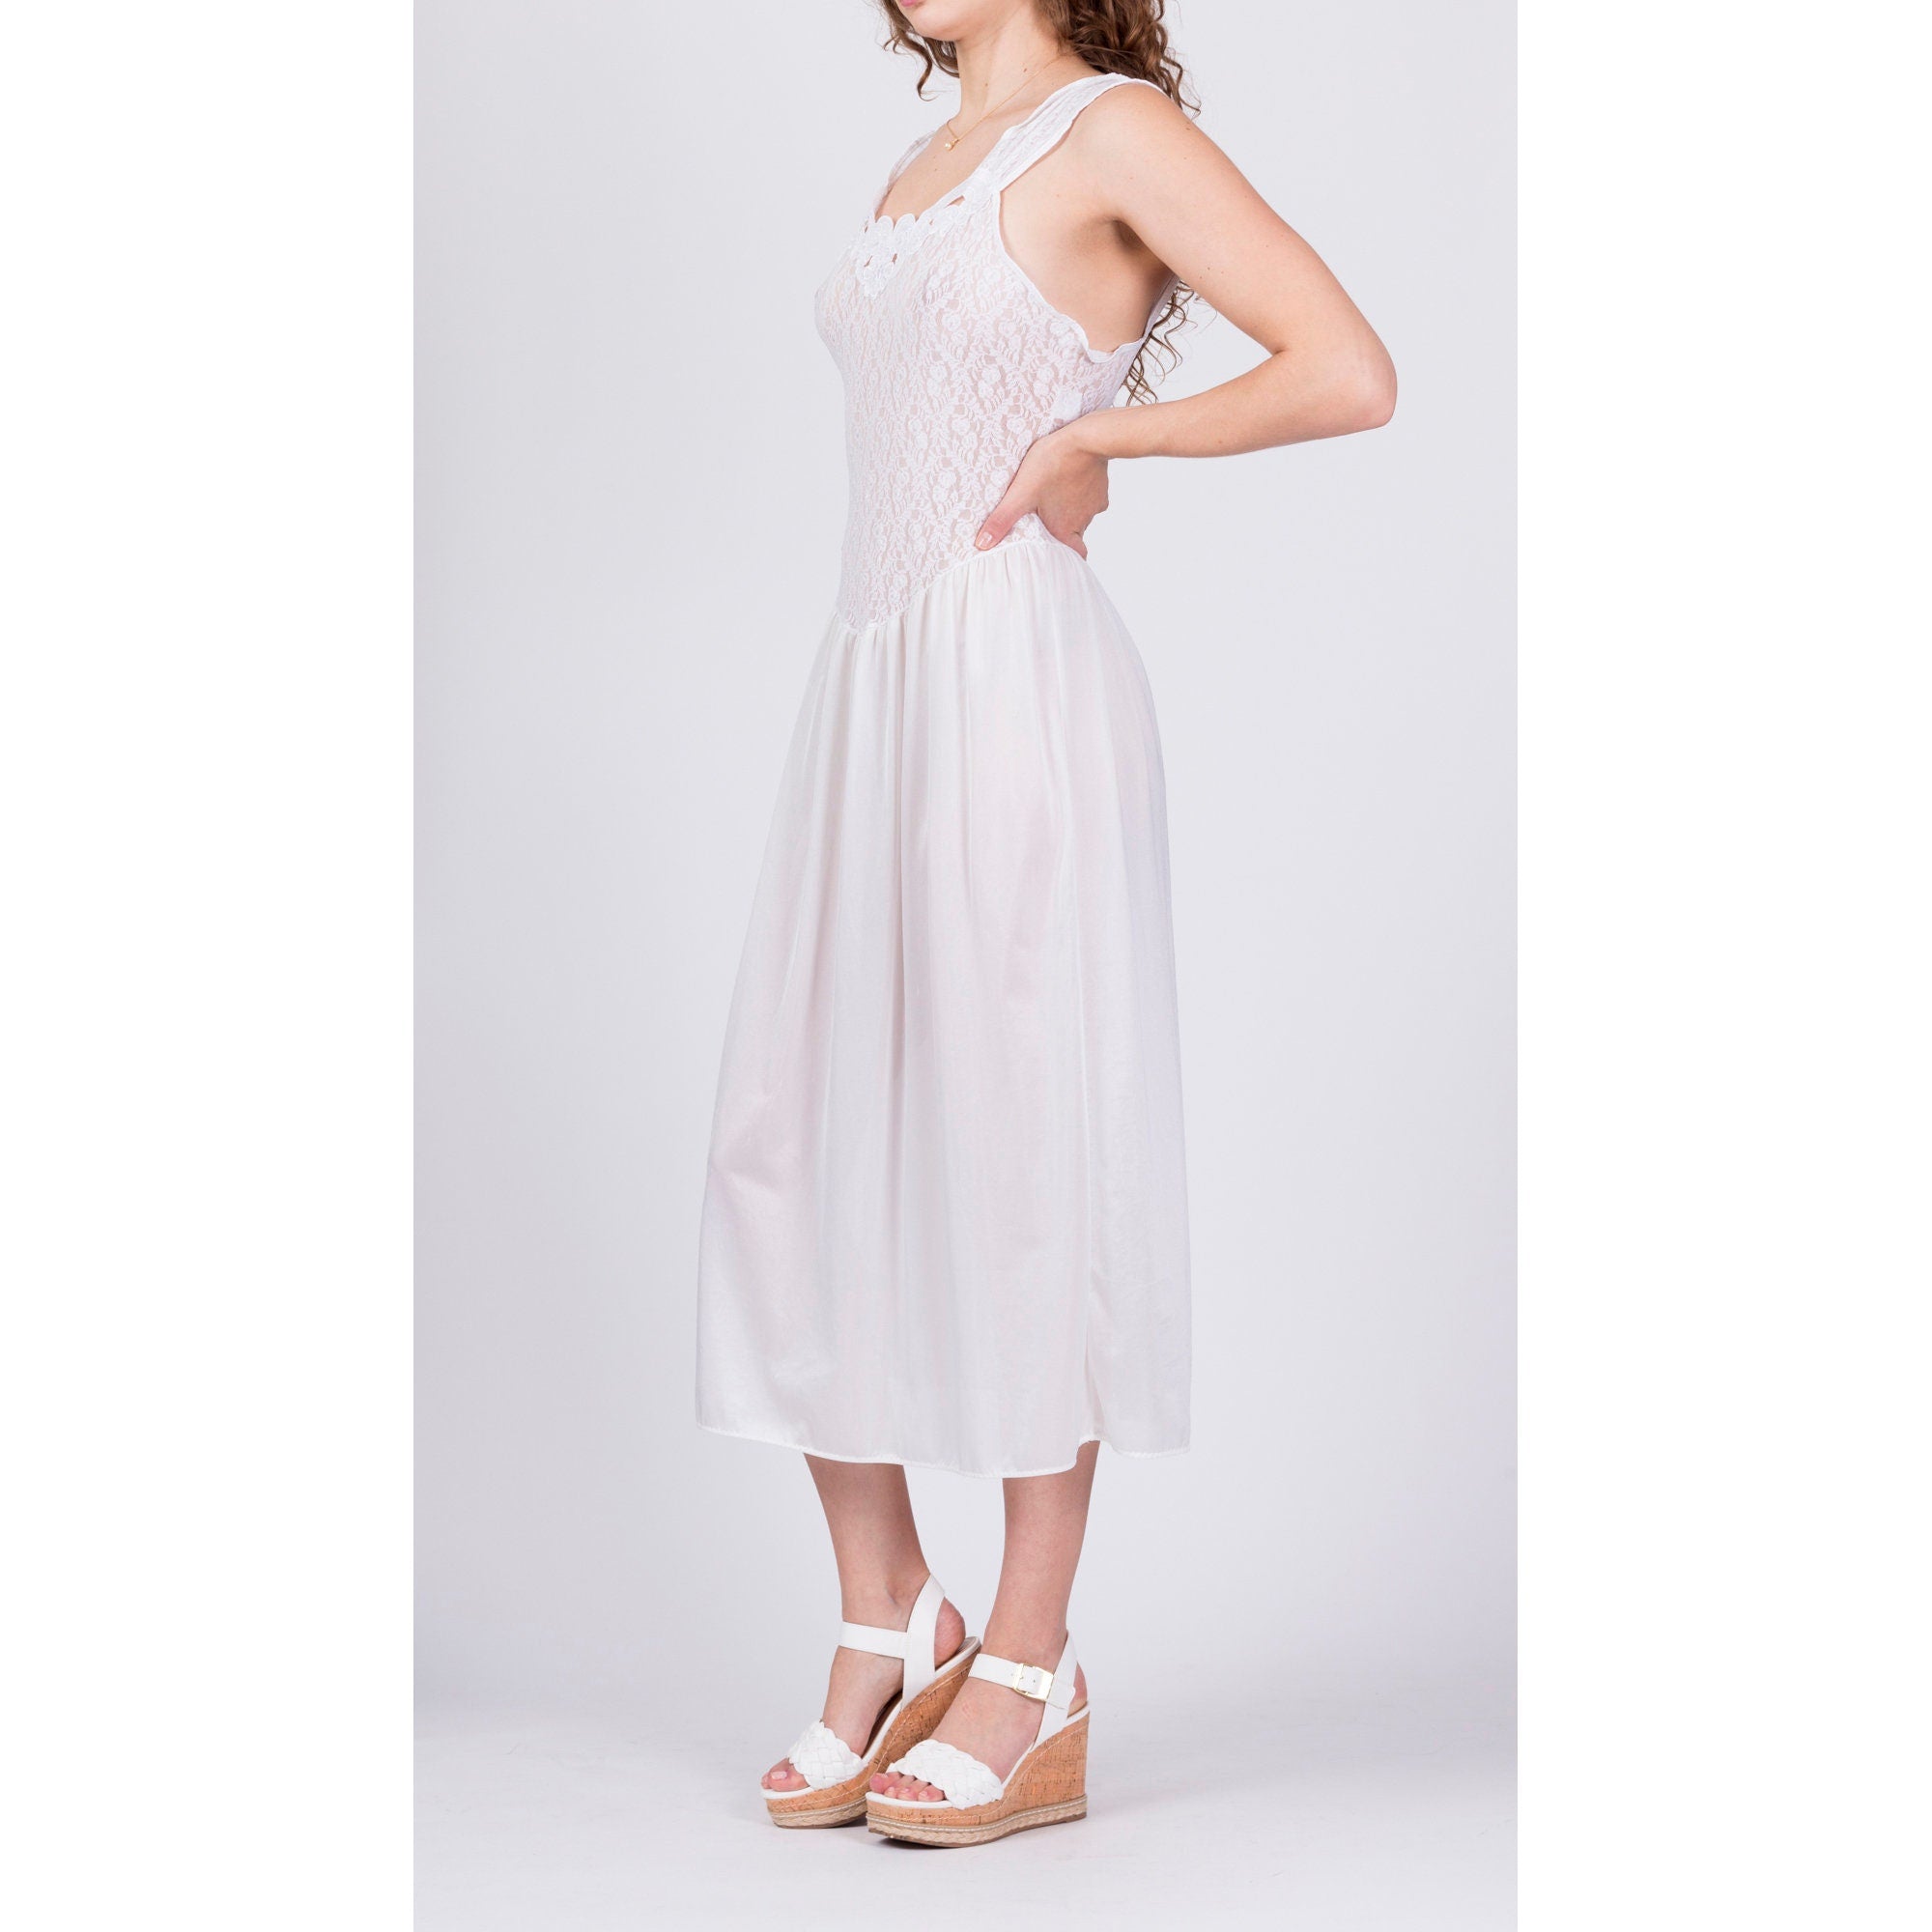 VKEKIEO Family Pajamas Matching Sets,Women's Fashion Lingerie Silk Lace  Robe Dress Nightdress Nightgown Sleepwear - Walmart.com